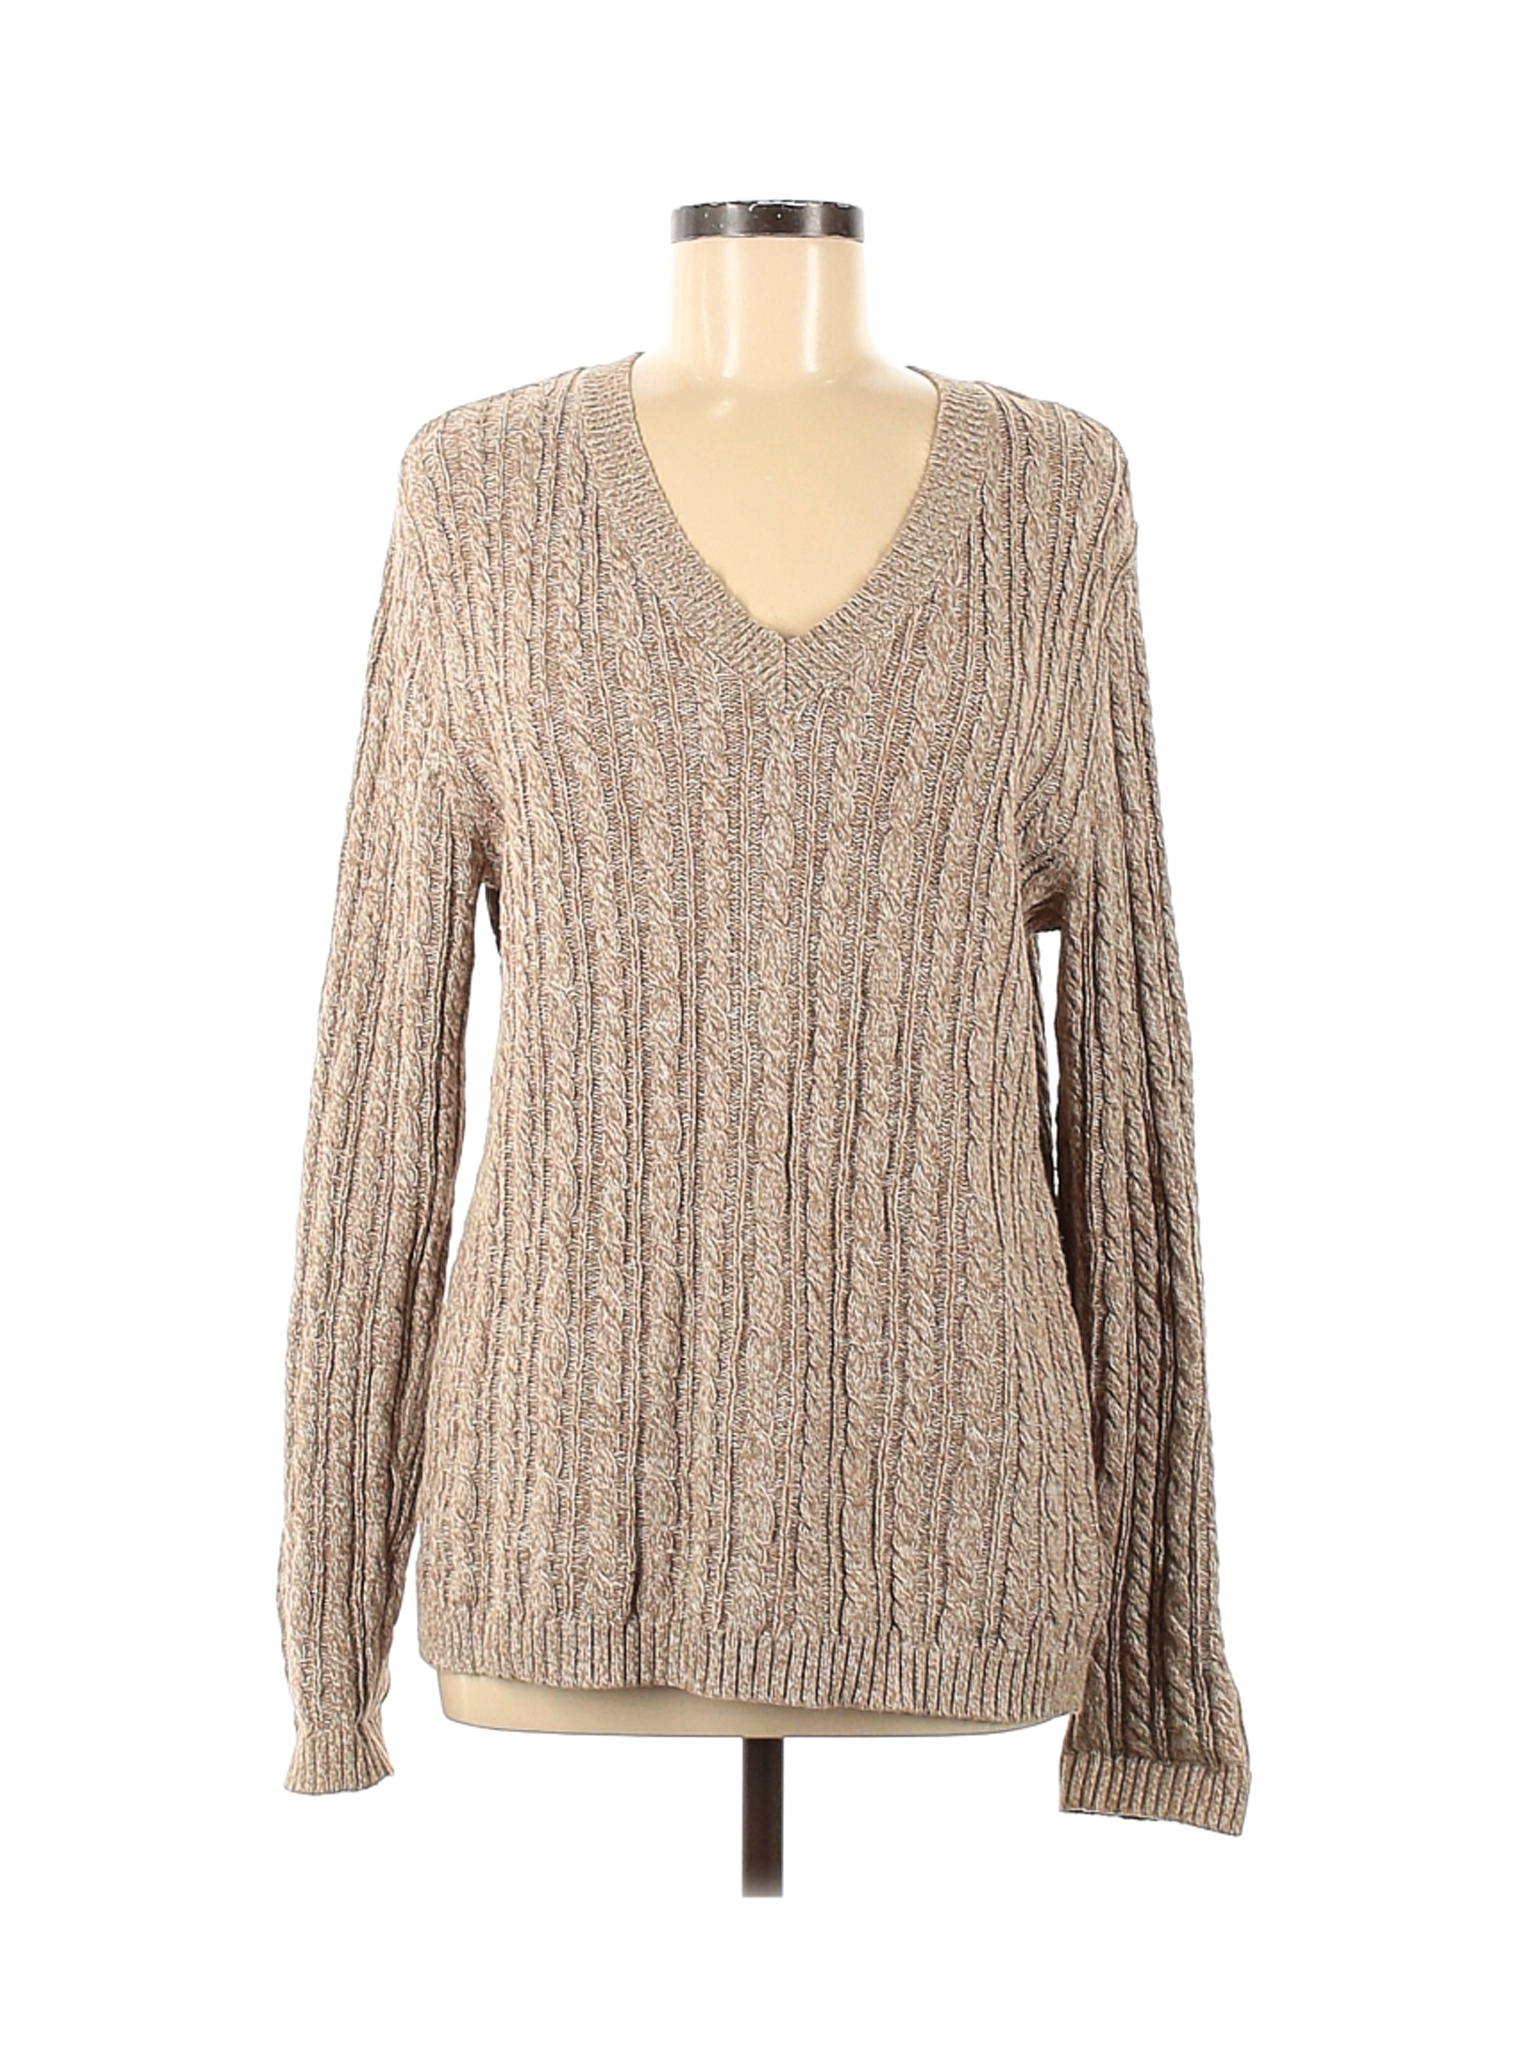 Croft & Barrow Women Brown Pullover Sweater M | eBay